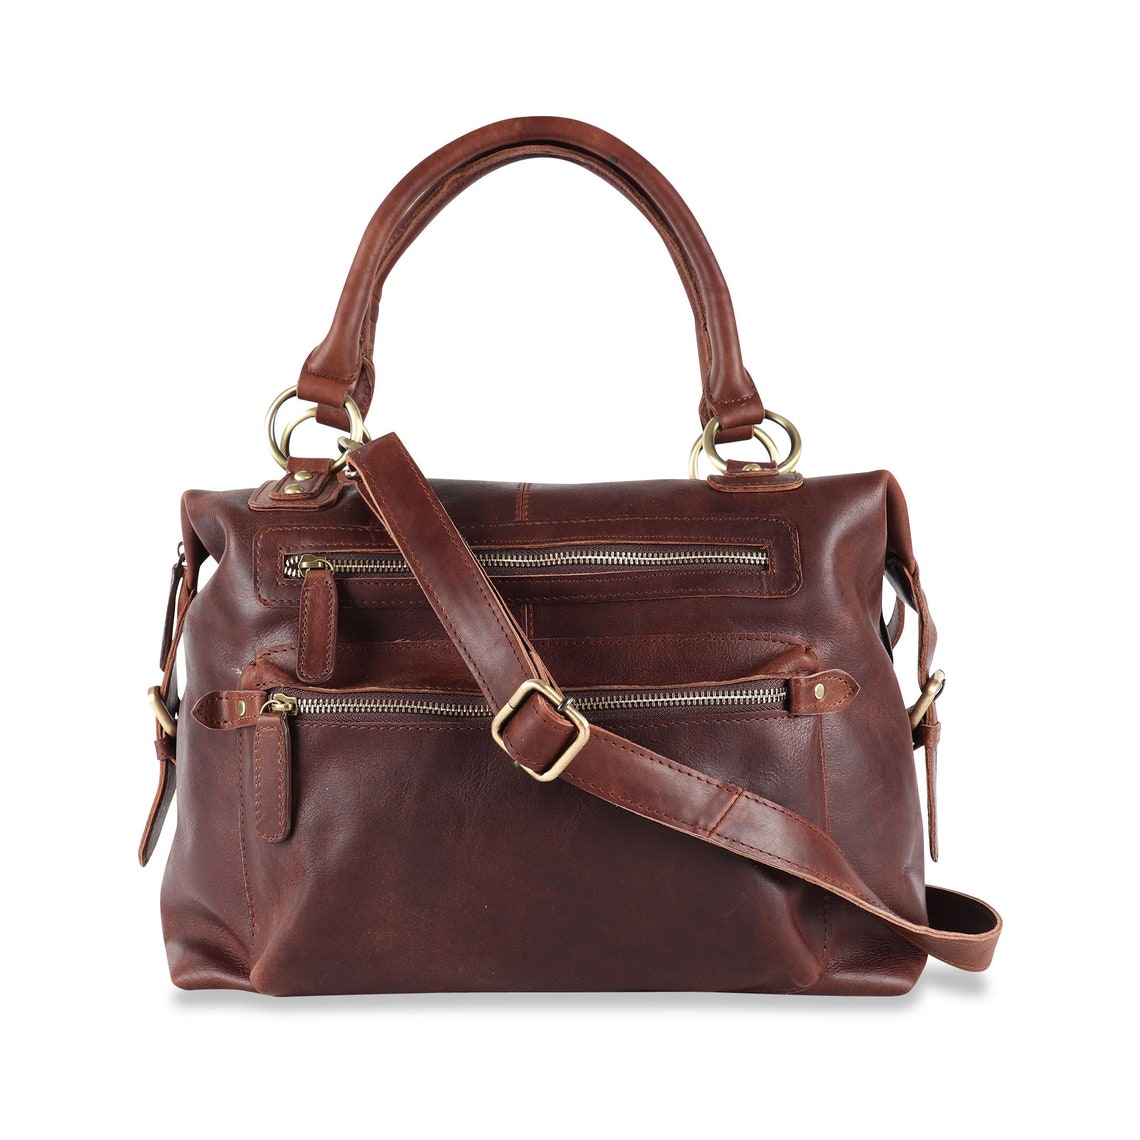 Leather Handbag Leather Purse Top Handle Bag Brown | Etsy